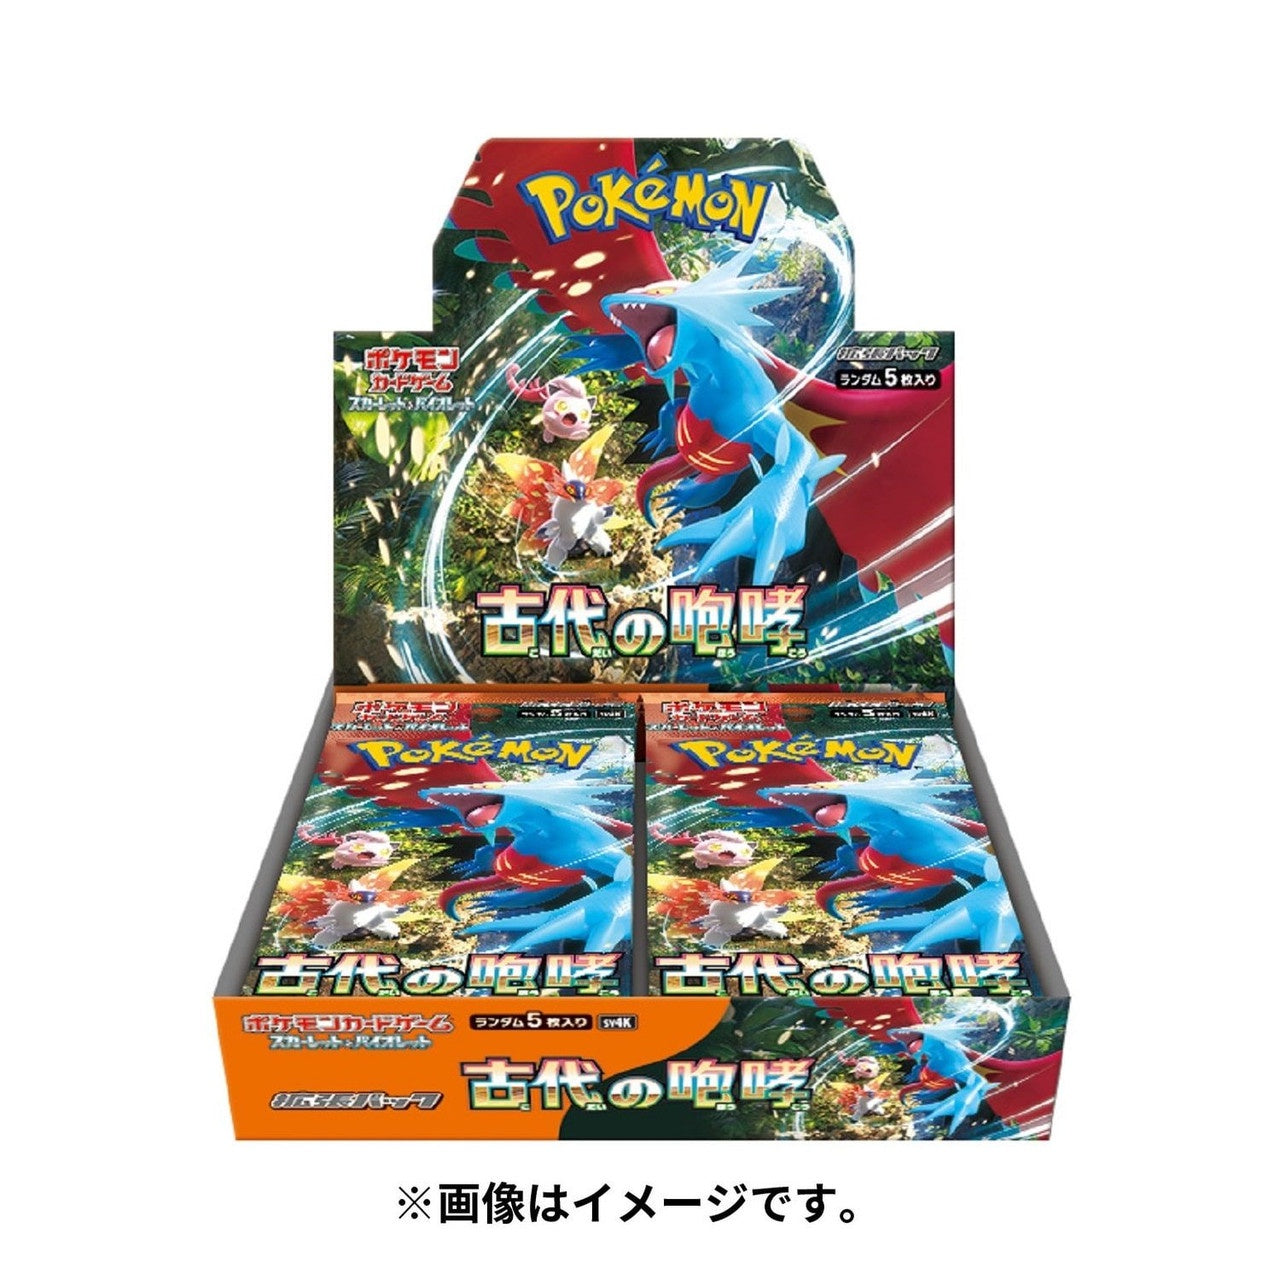 Pokemon TCG Scarlet & Violet Expansion Pack Booster Box - Ancient Roar (Japanese)